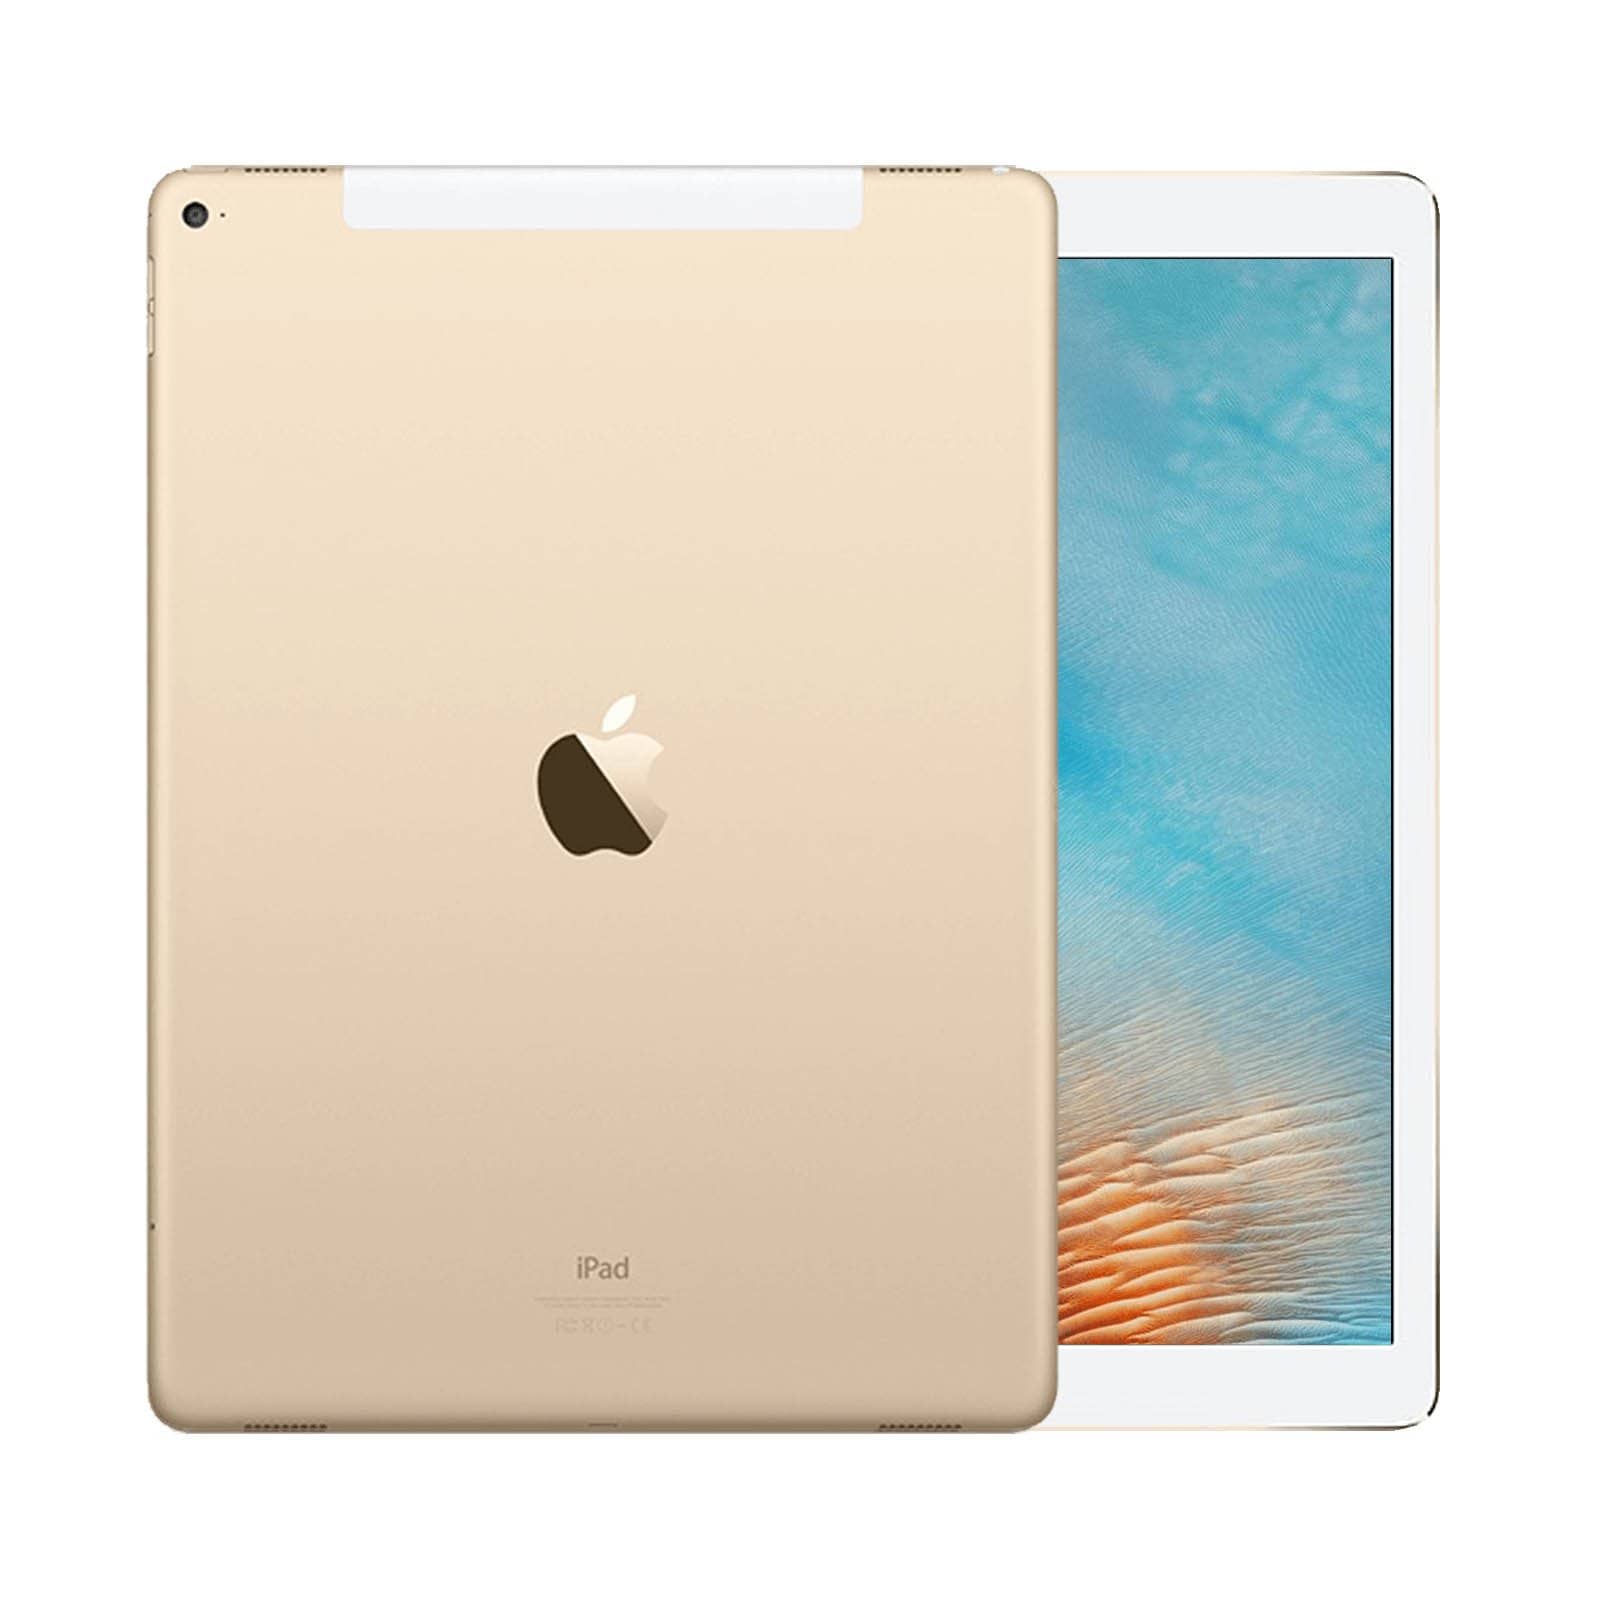 iPad Pro 12.9 Inch 2nd Gen 512GB Gold Good - Unlocked 512GB Gold Good